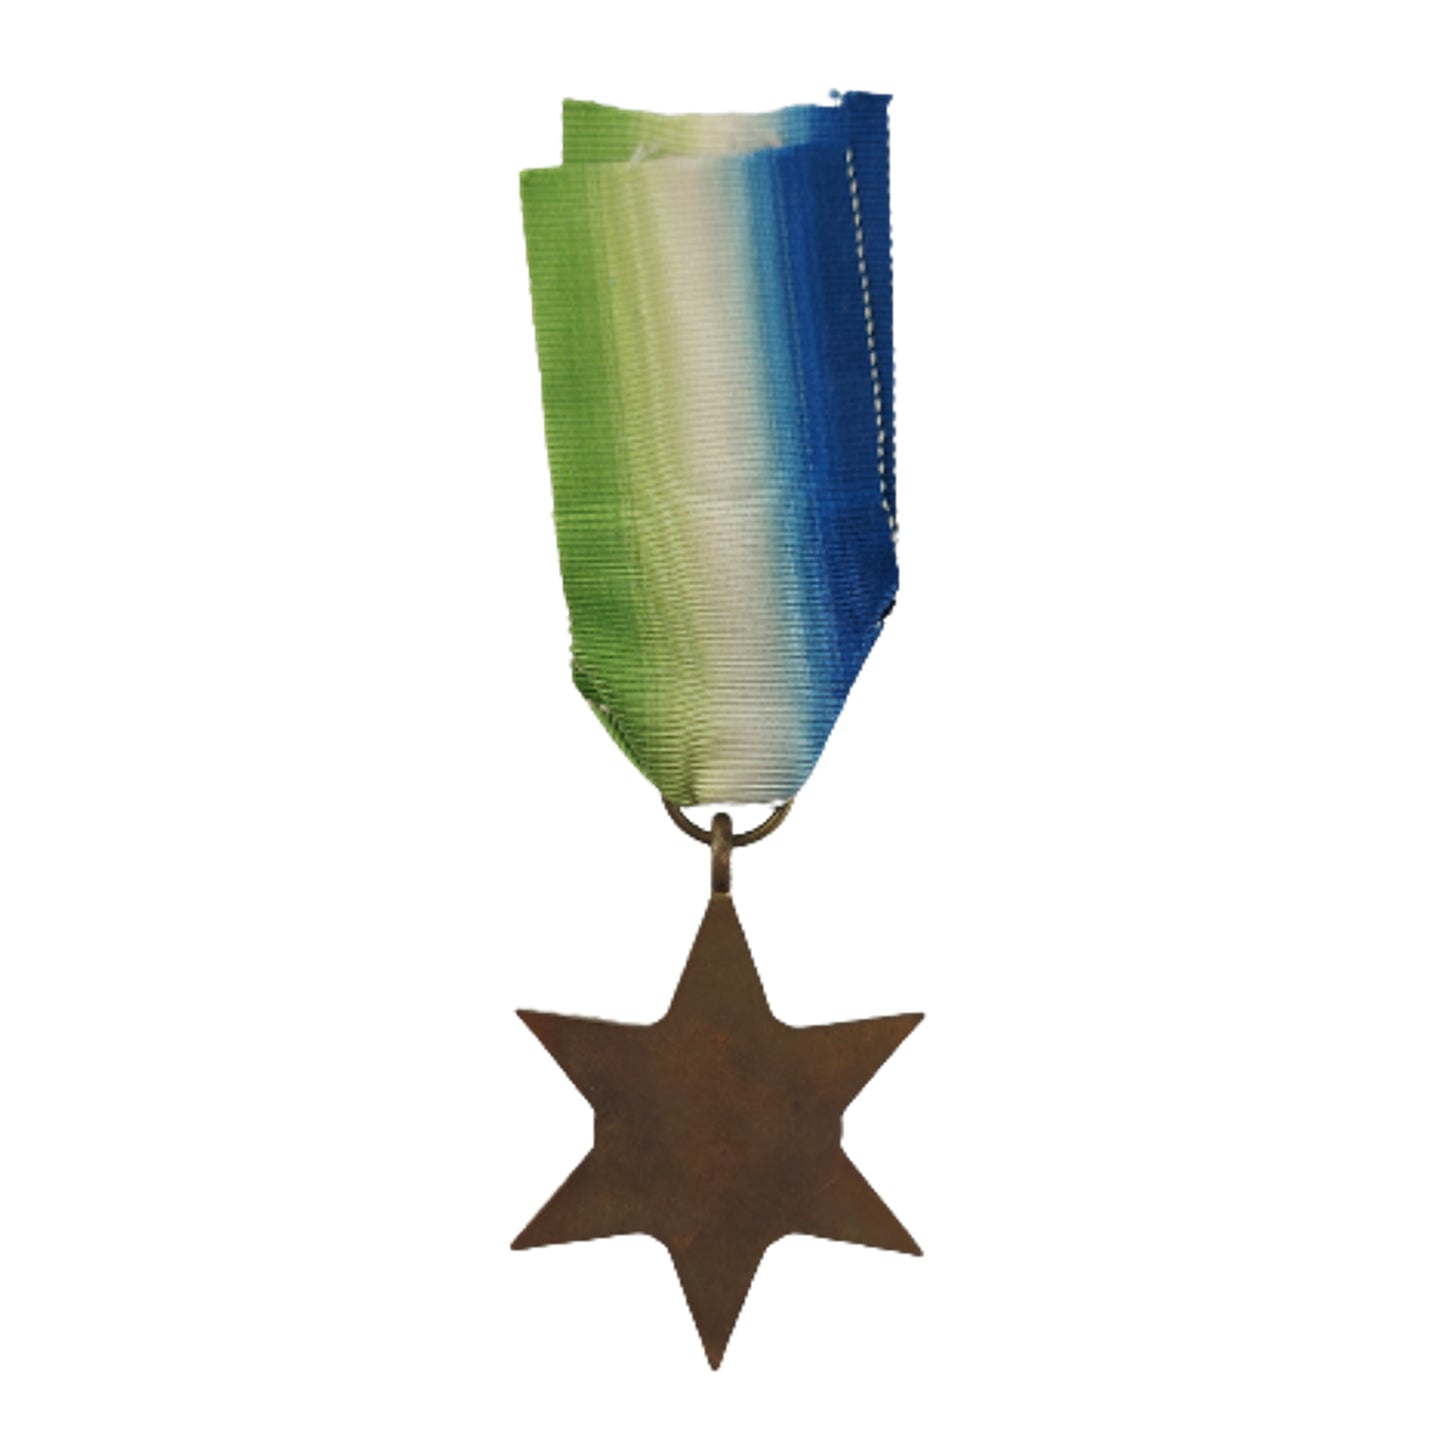 WW2 Canadian Atlantic Star Medal